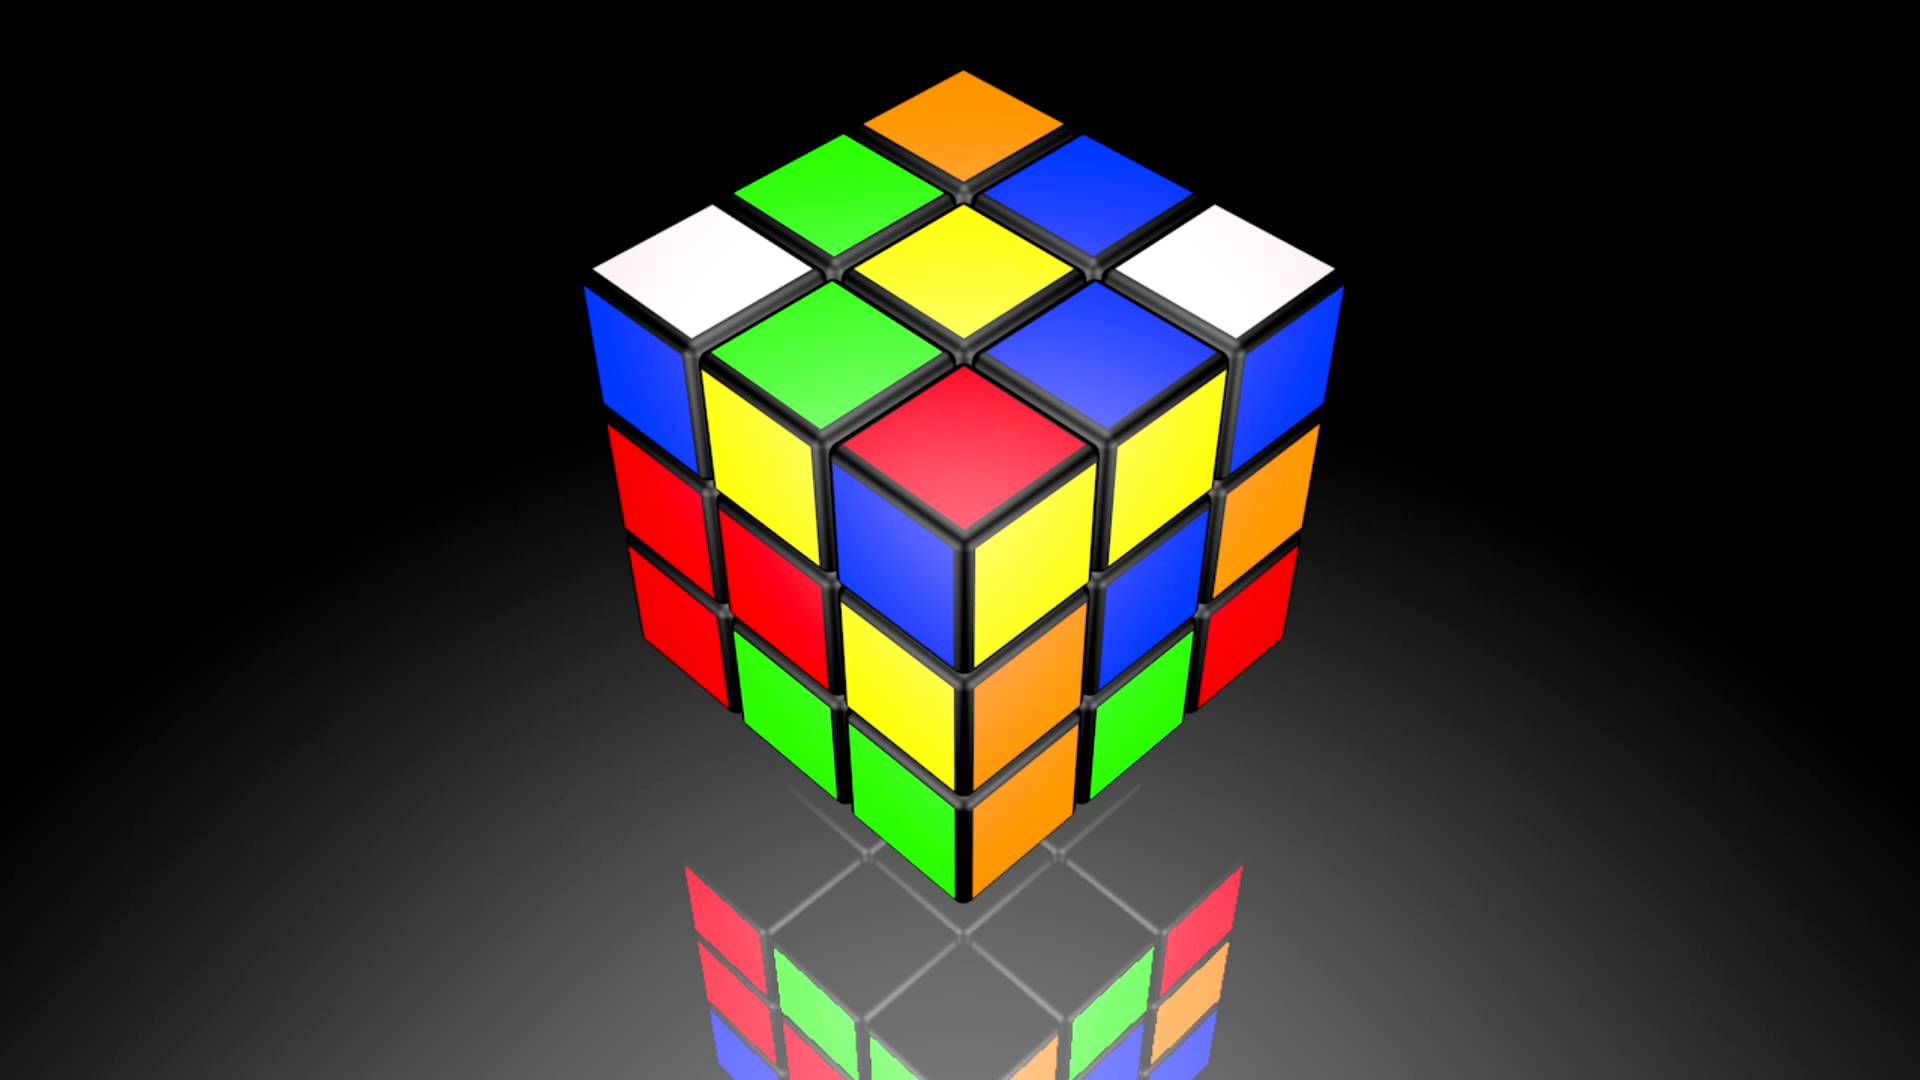 Rubik's Cube Wallpaper High Quality